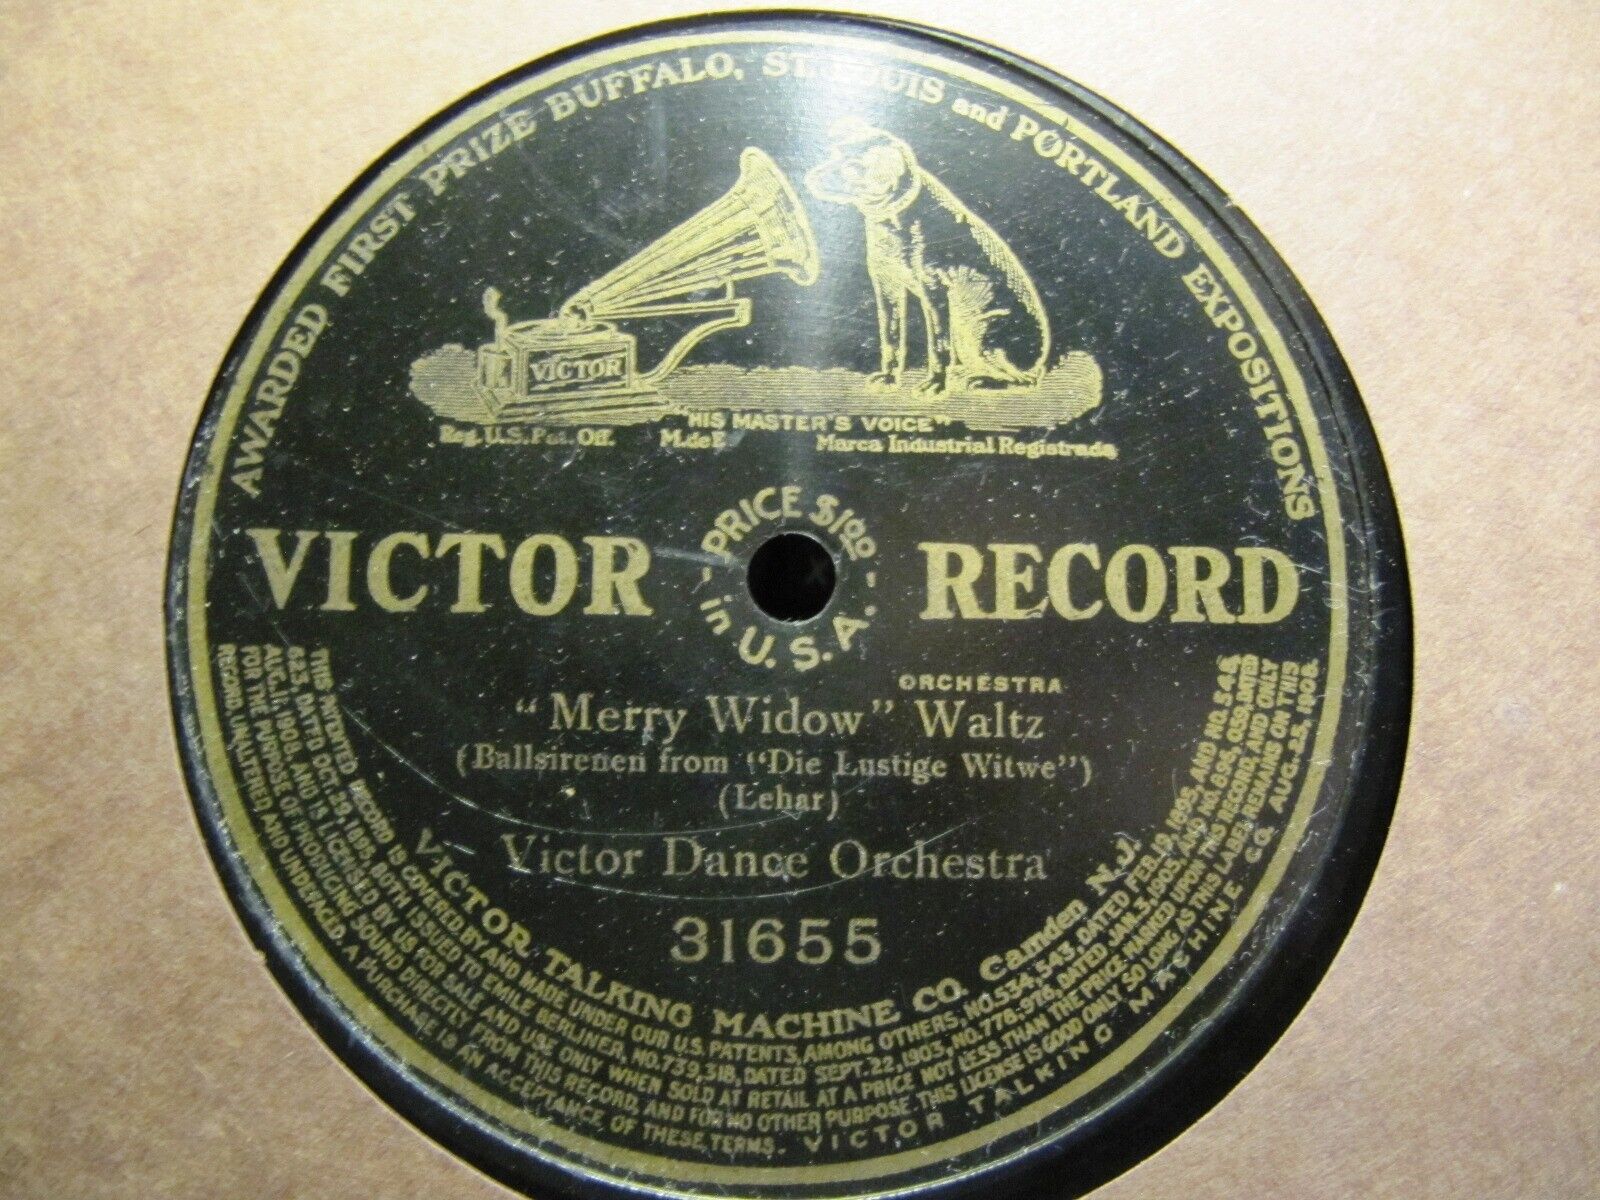 1907 VICTOR DANCE ORCHESTRA Franz LEHAR Merry Widow Waltz Walter B Rogers 31655